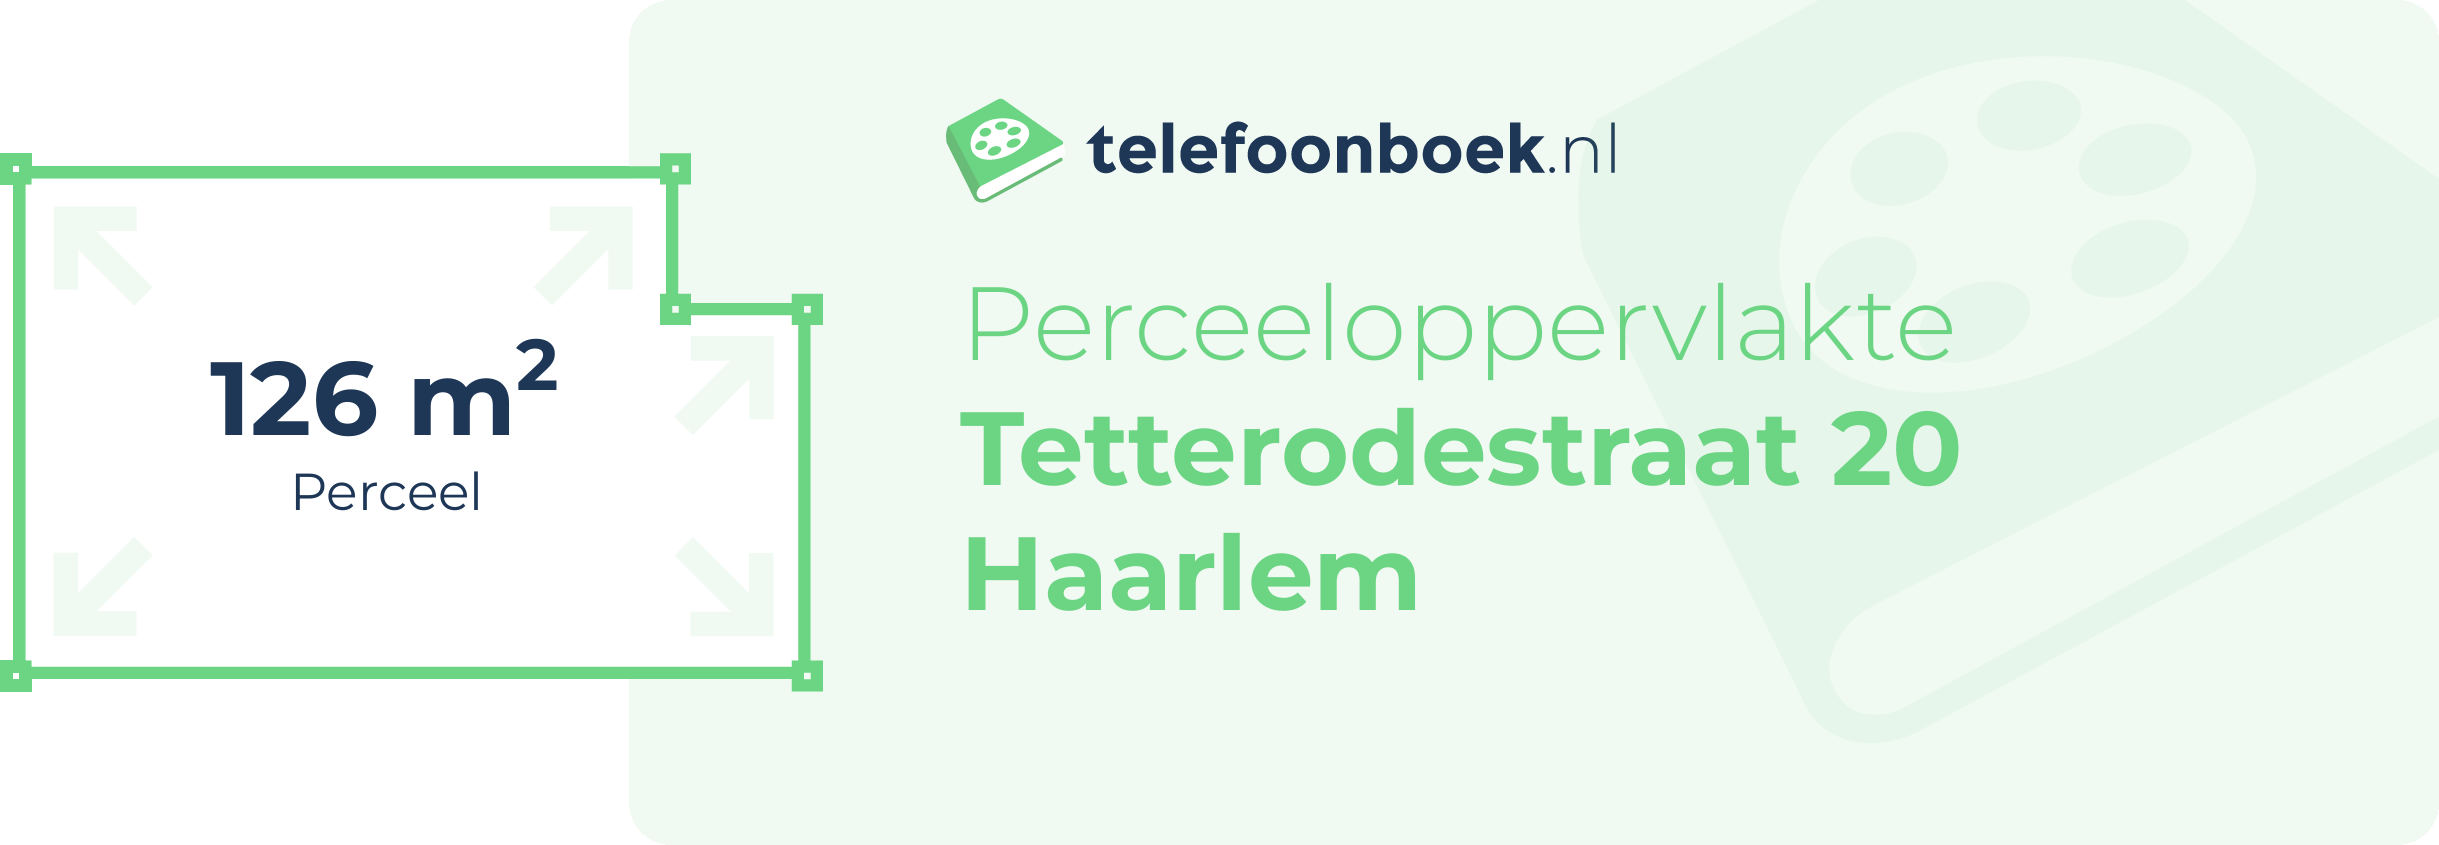 Perceeloppervlakte Tetterodestraat 20 Haarlem